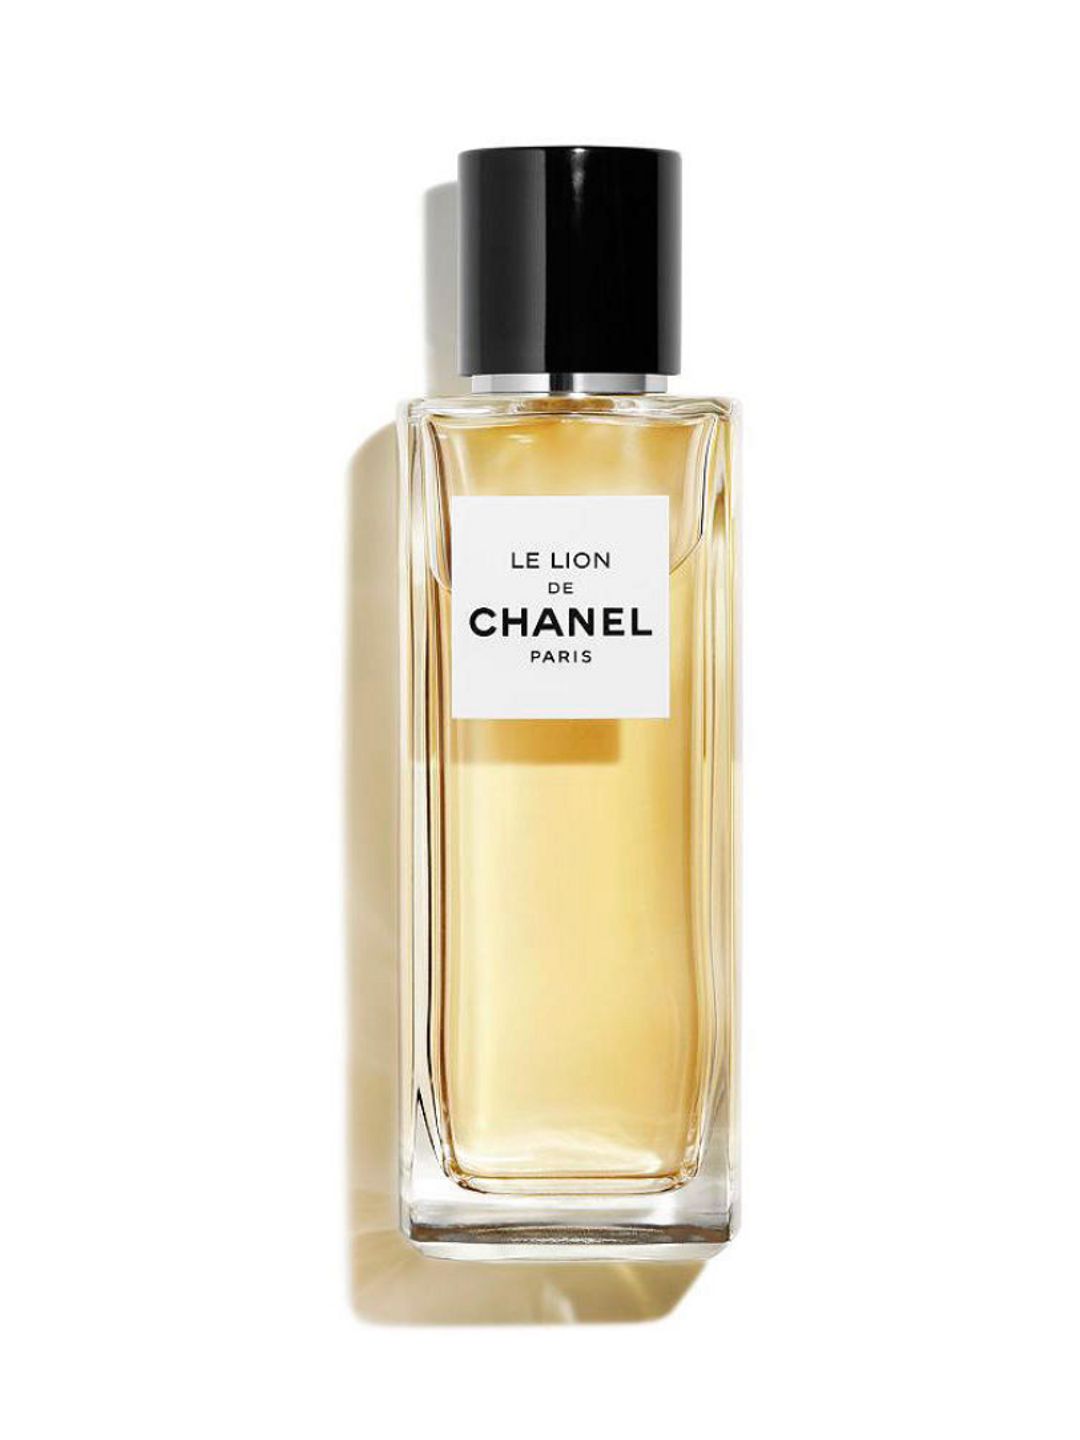 Chanel N°5 Eau De Perfume For Women 100ml - Branded Fragrance India